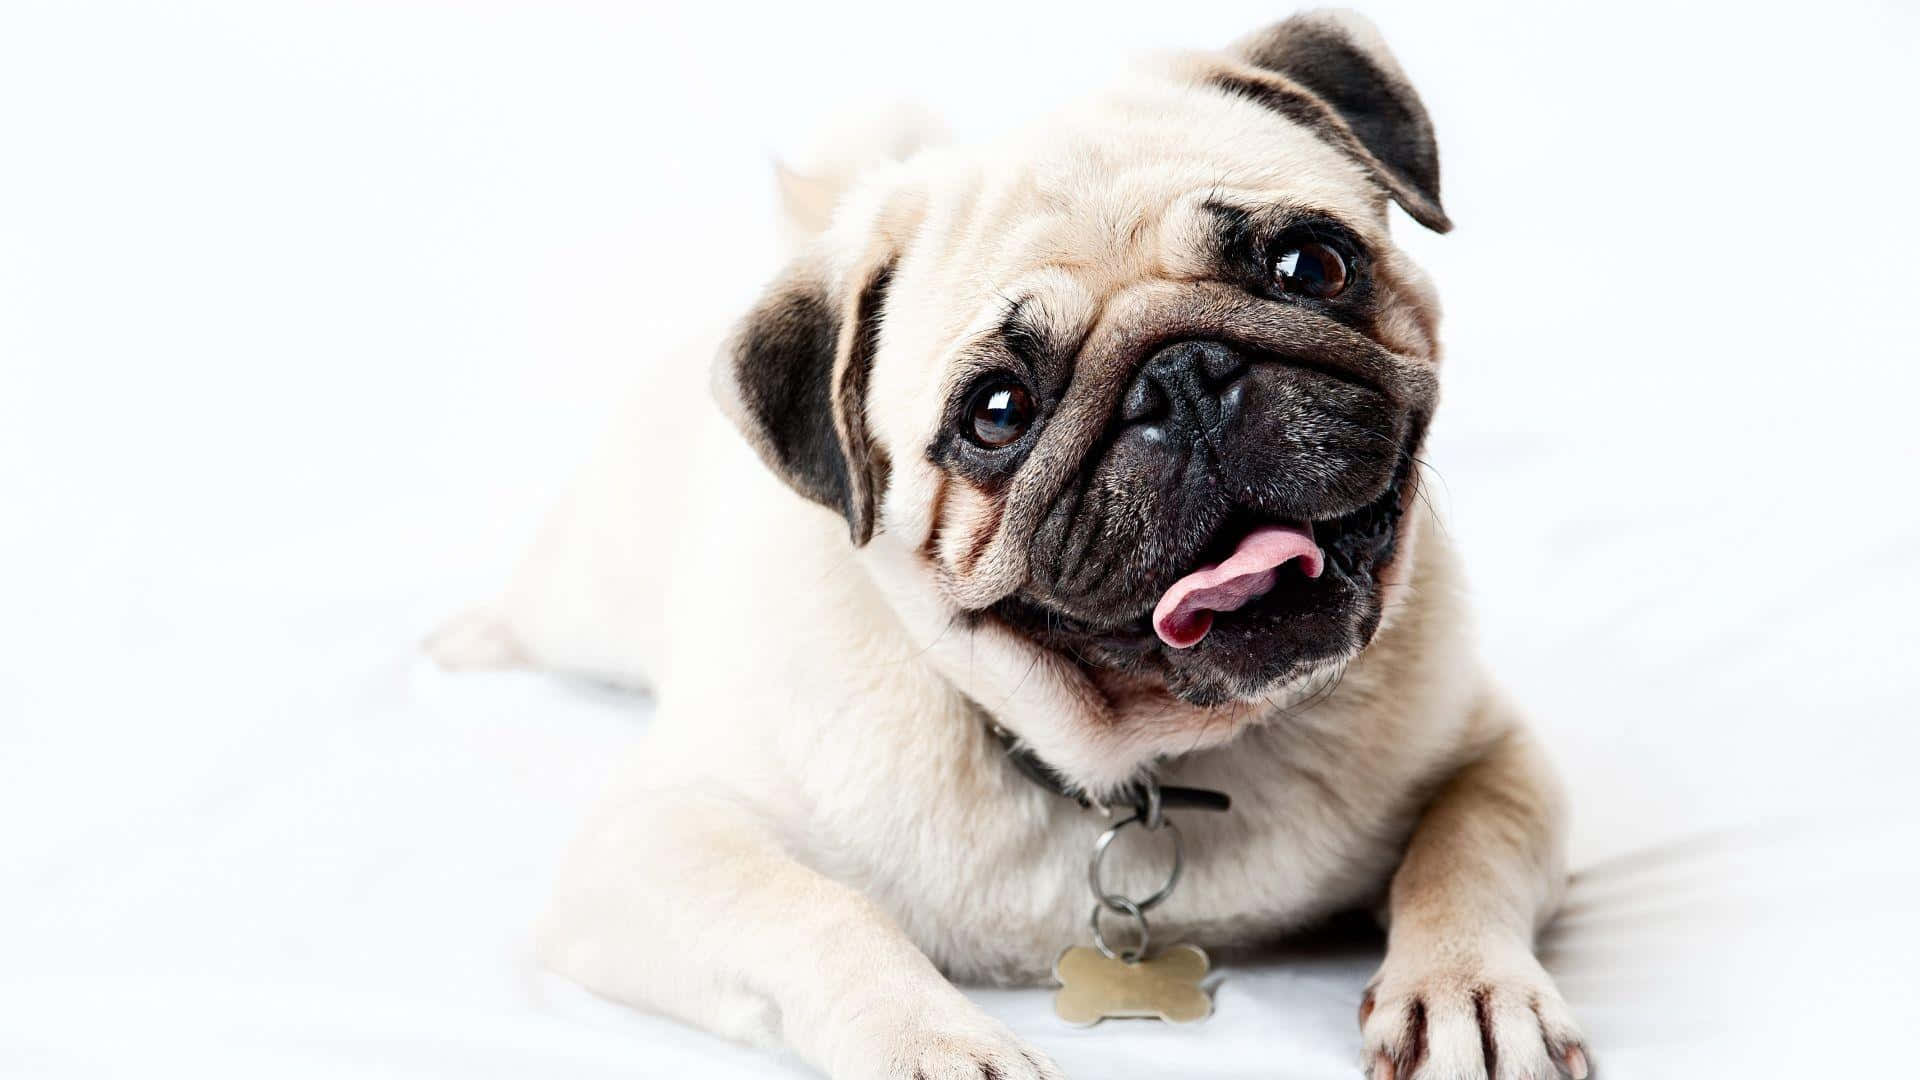 Cute Pug Dog Photoshoot Wallpaper